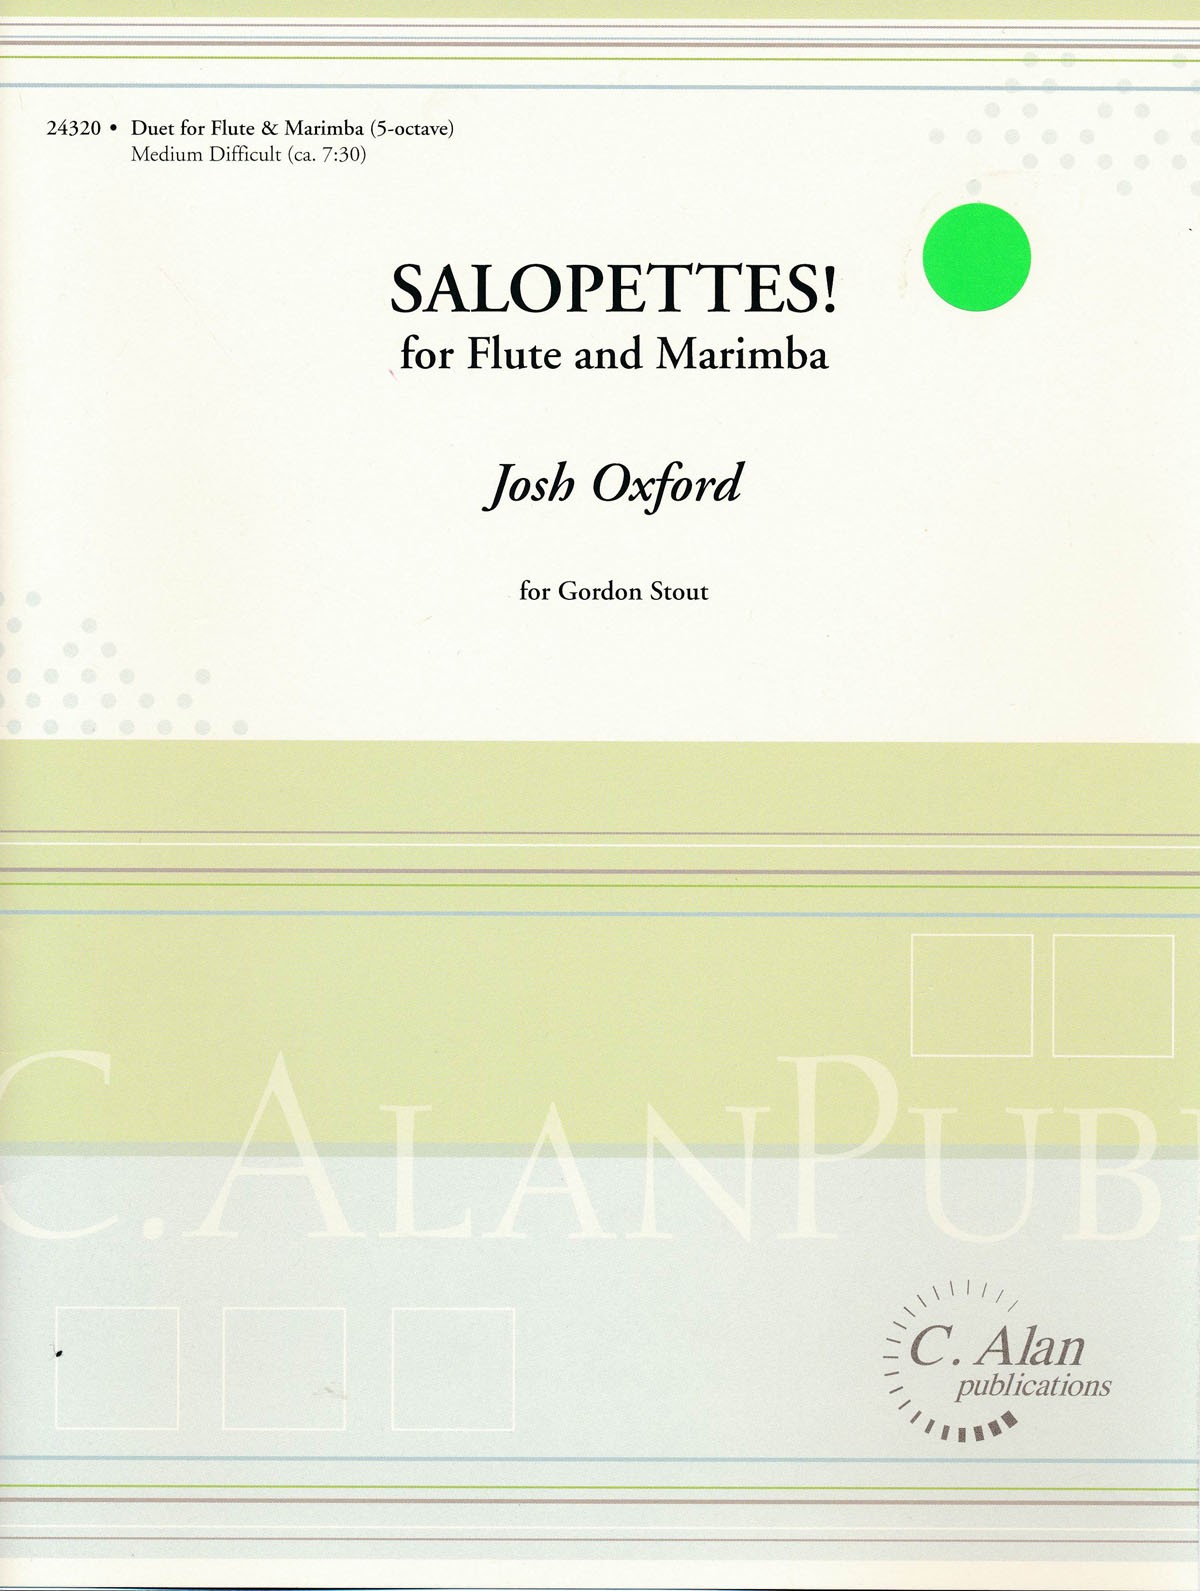 Salopettes! by Josh Oxford